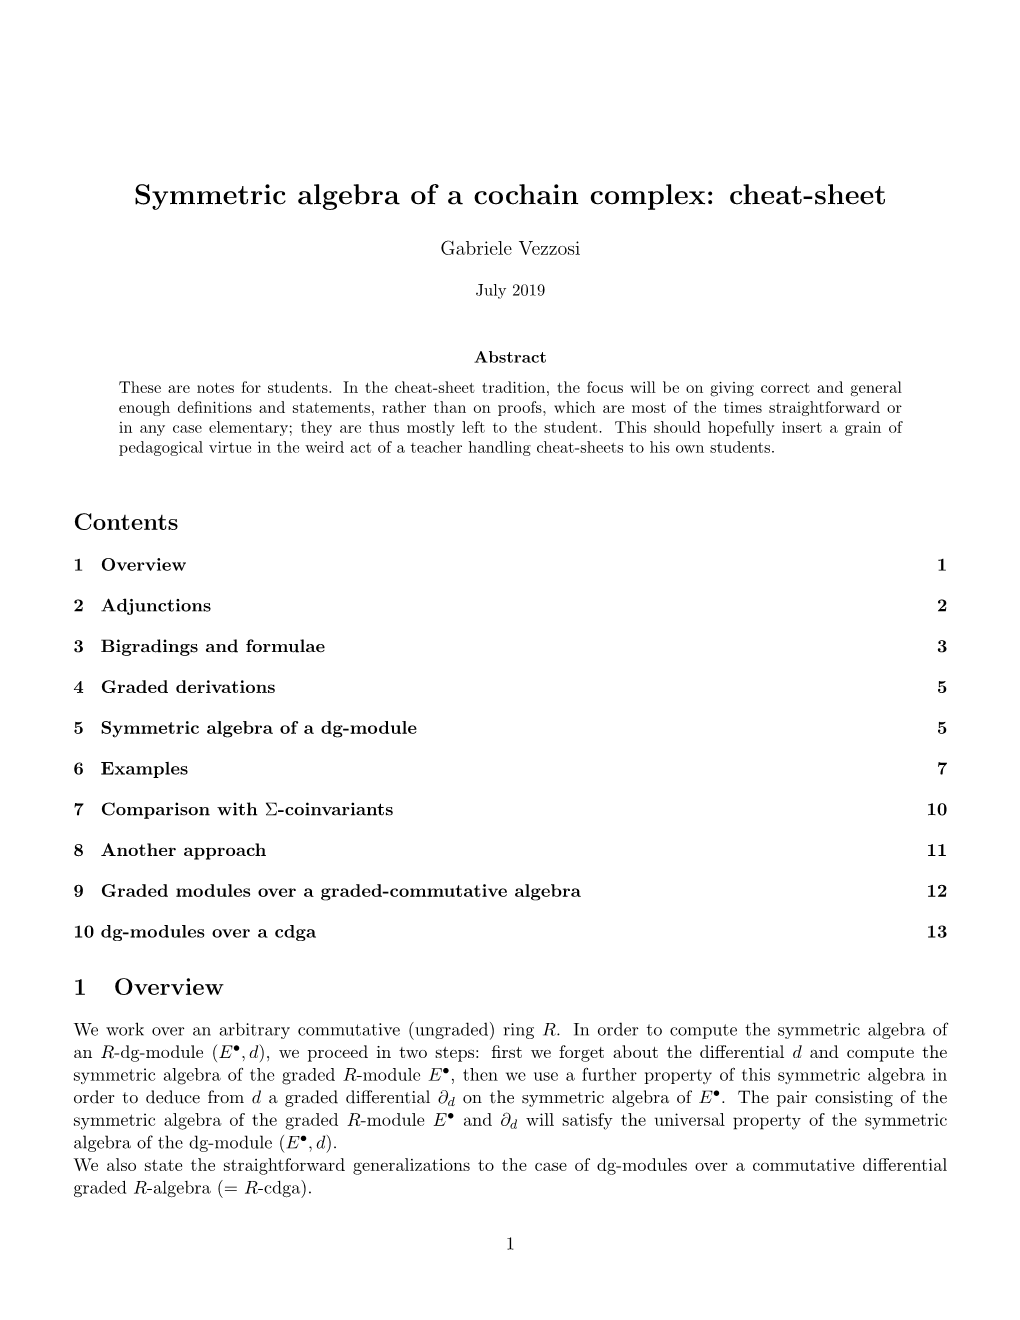 Symmetric Algebra of a Cochain Complex: Cheat-Sheet